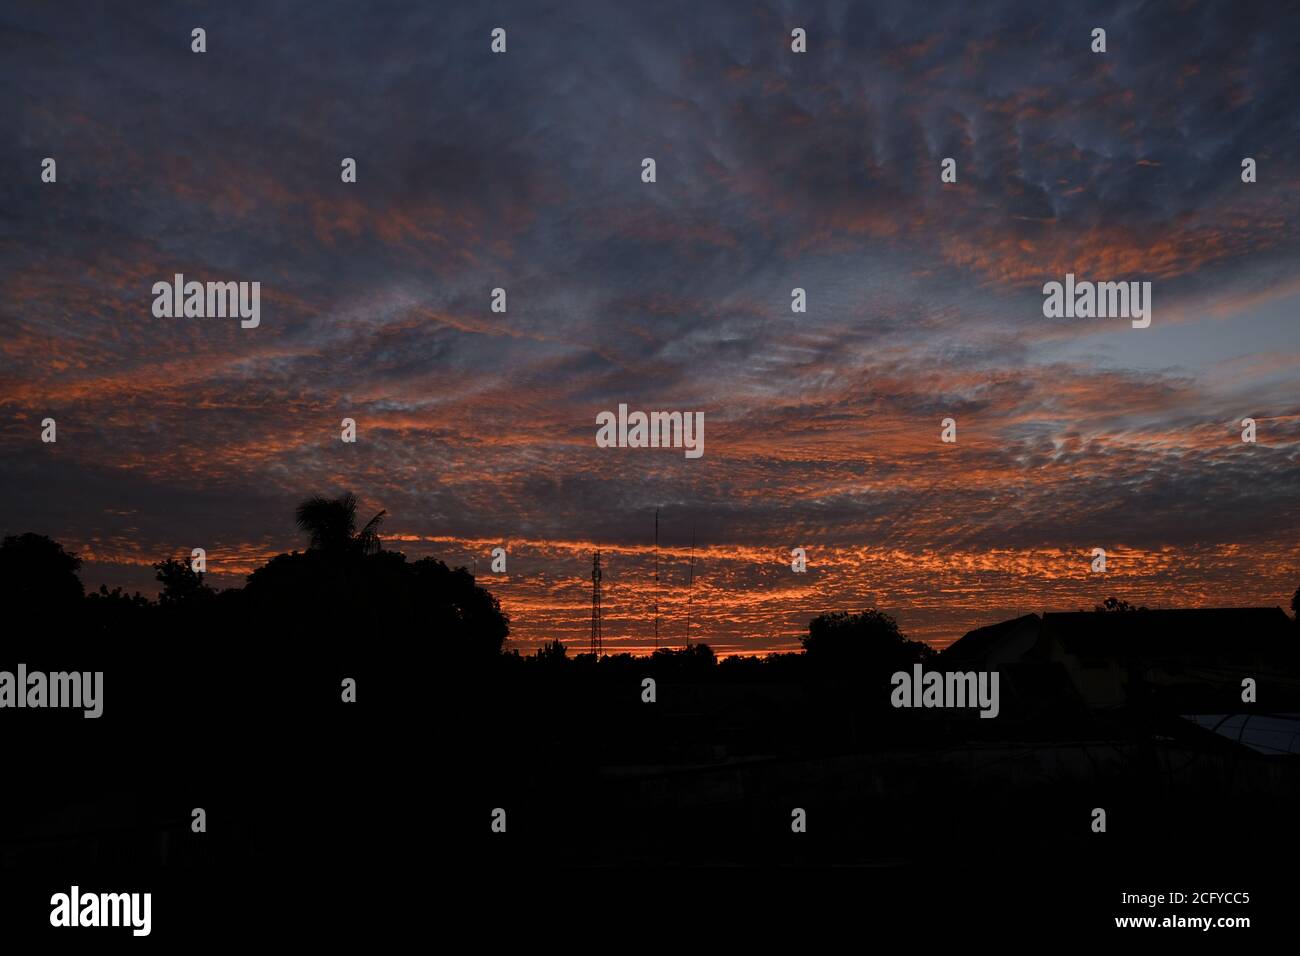 Sonnenaufgang oder Sonnenuntergang am Himmel Stockfoto